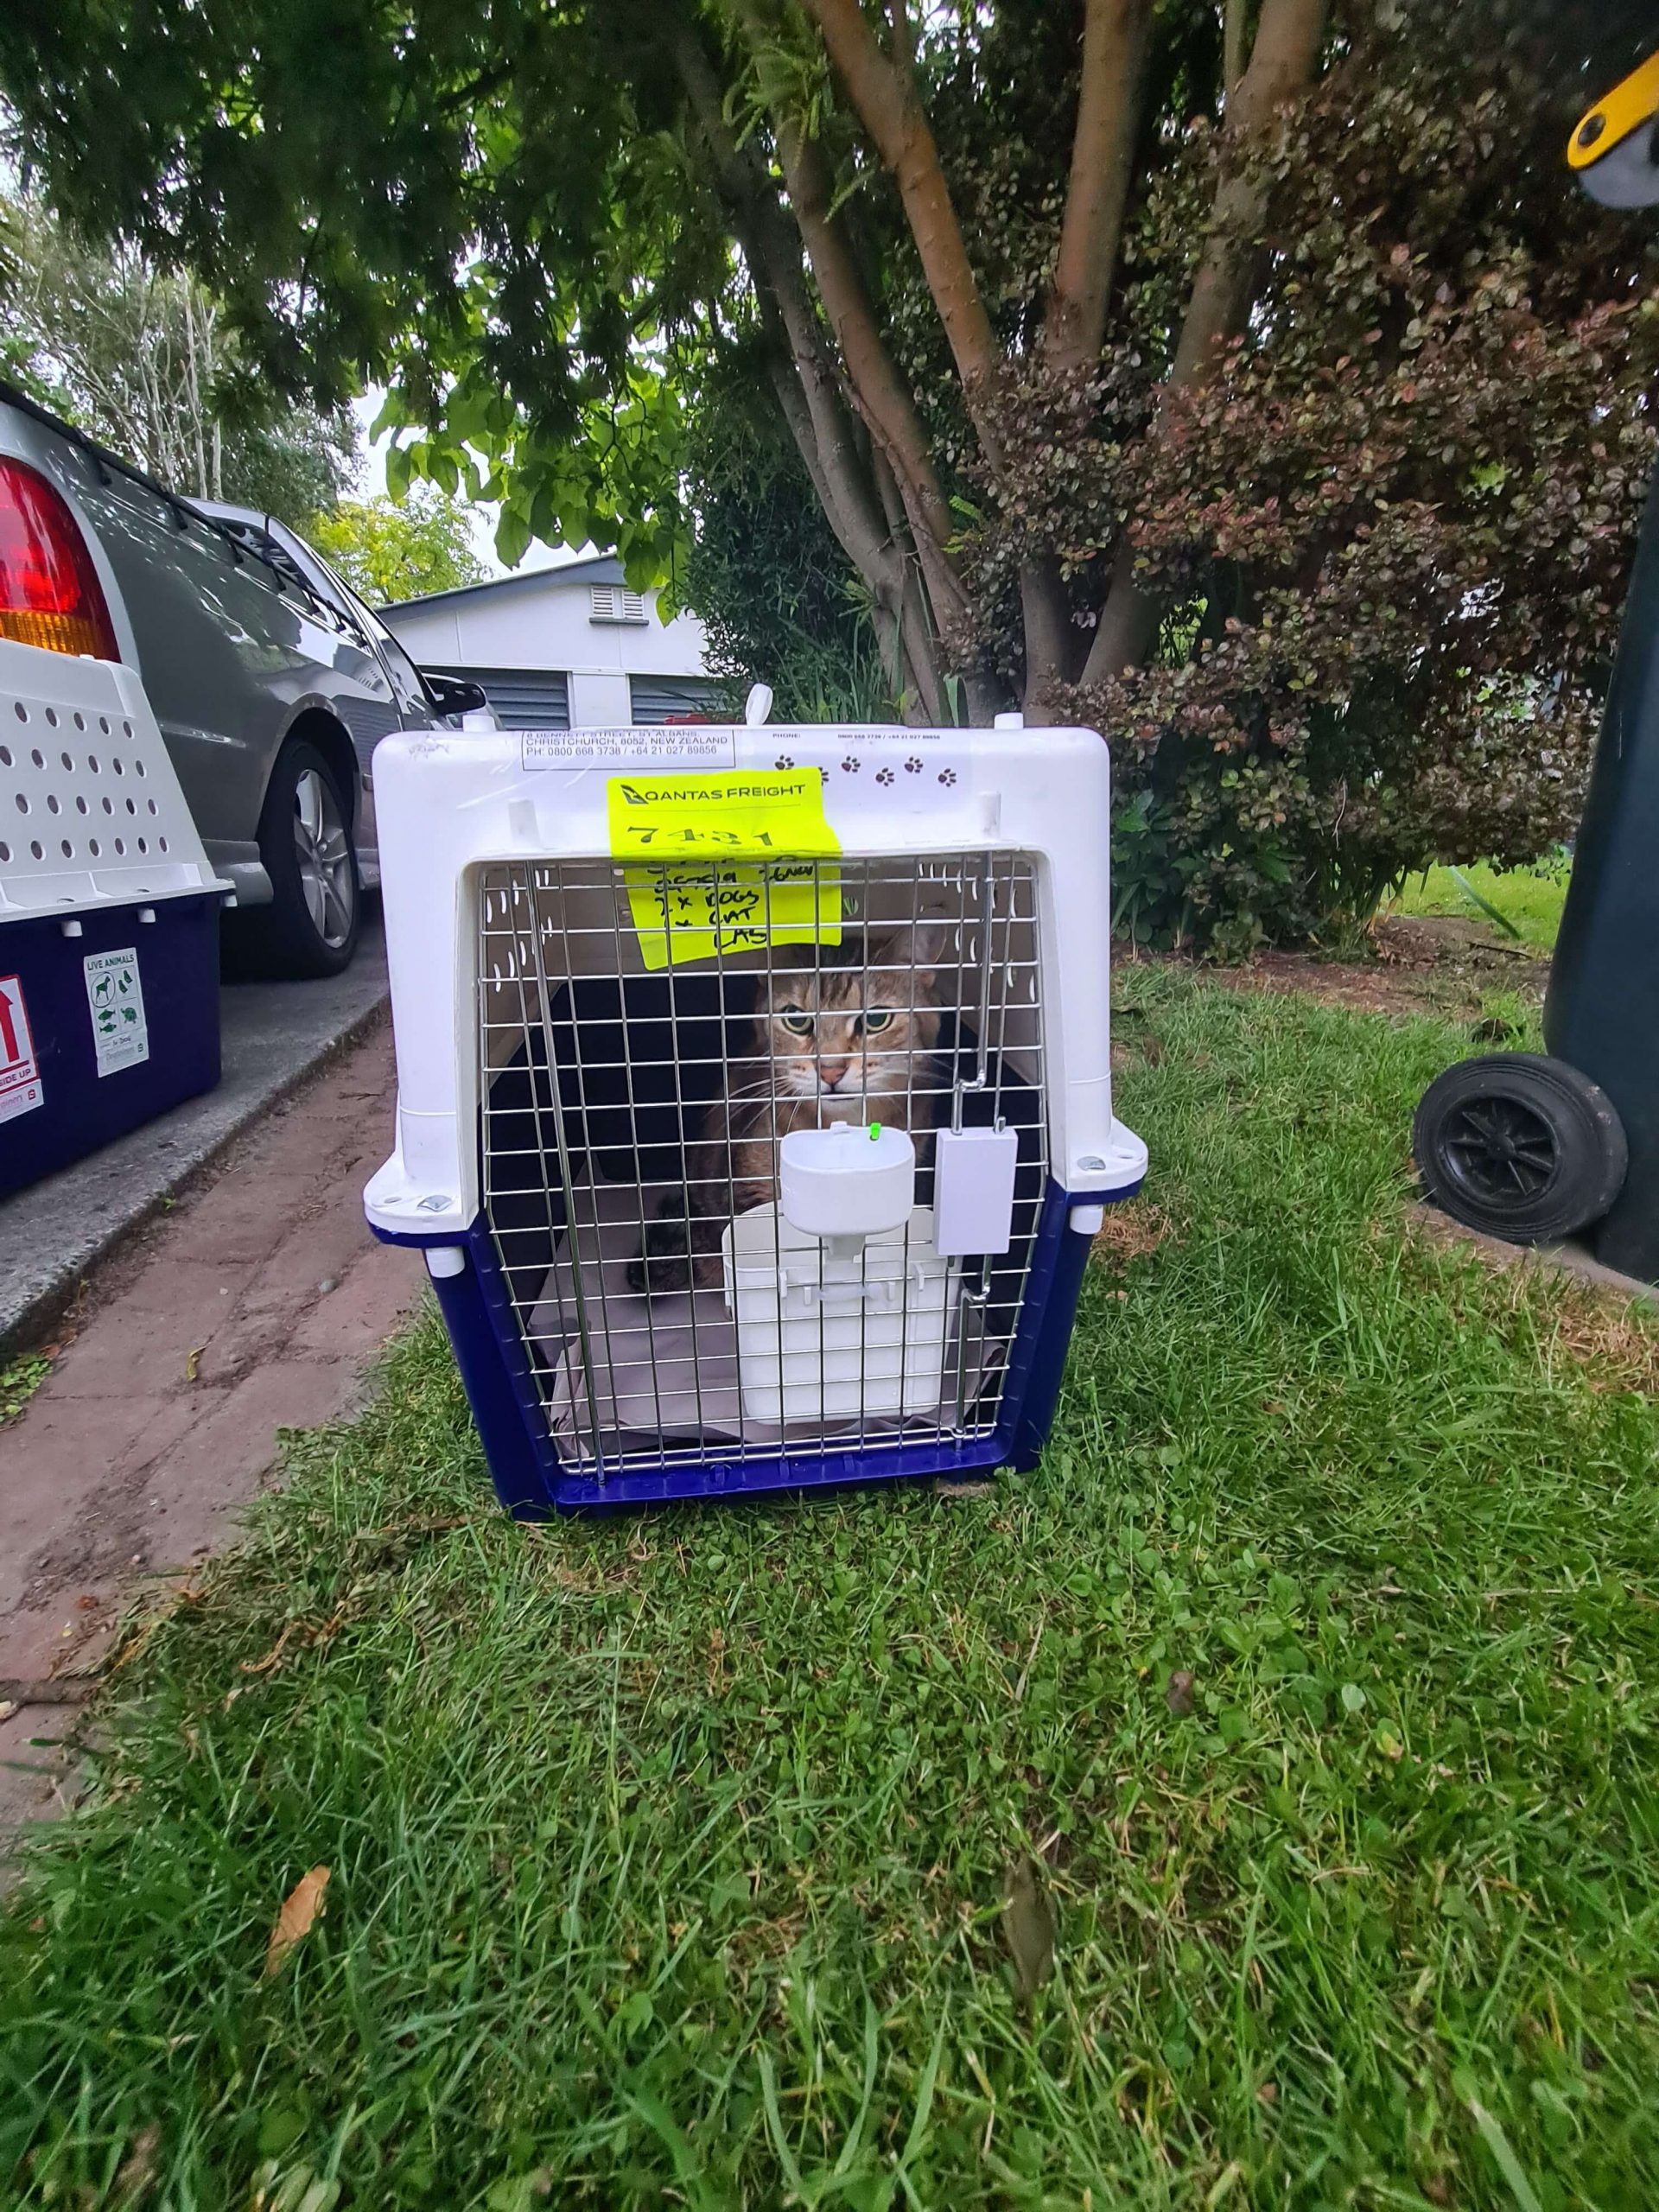 tabby cat in a crate